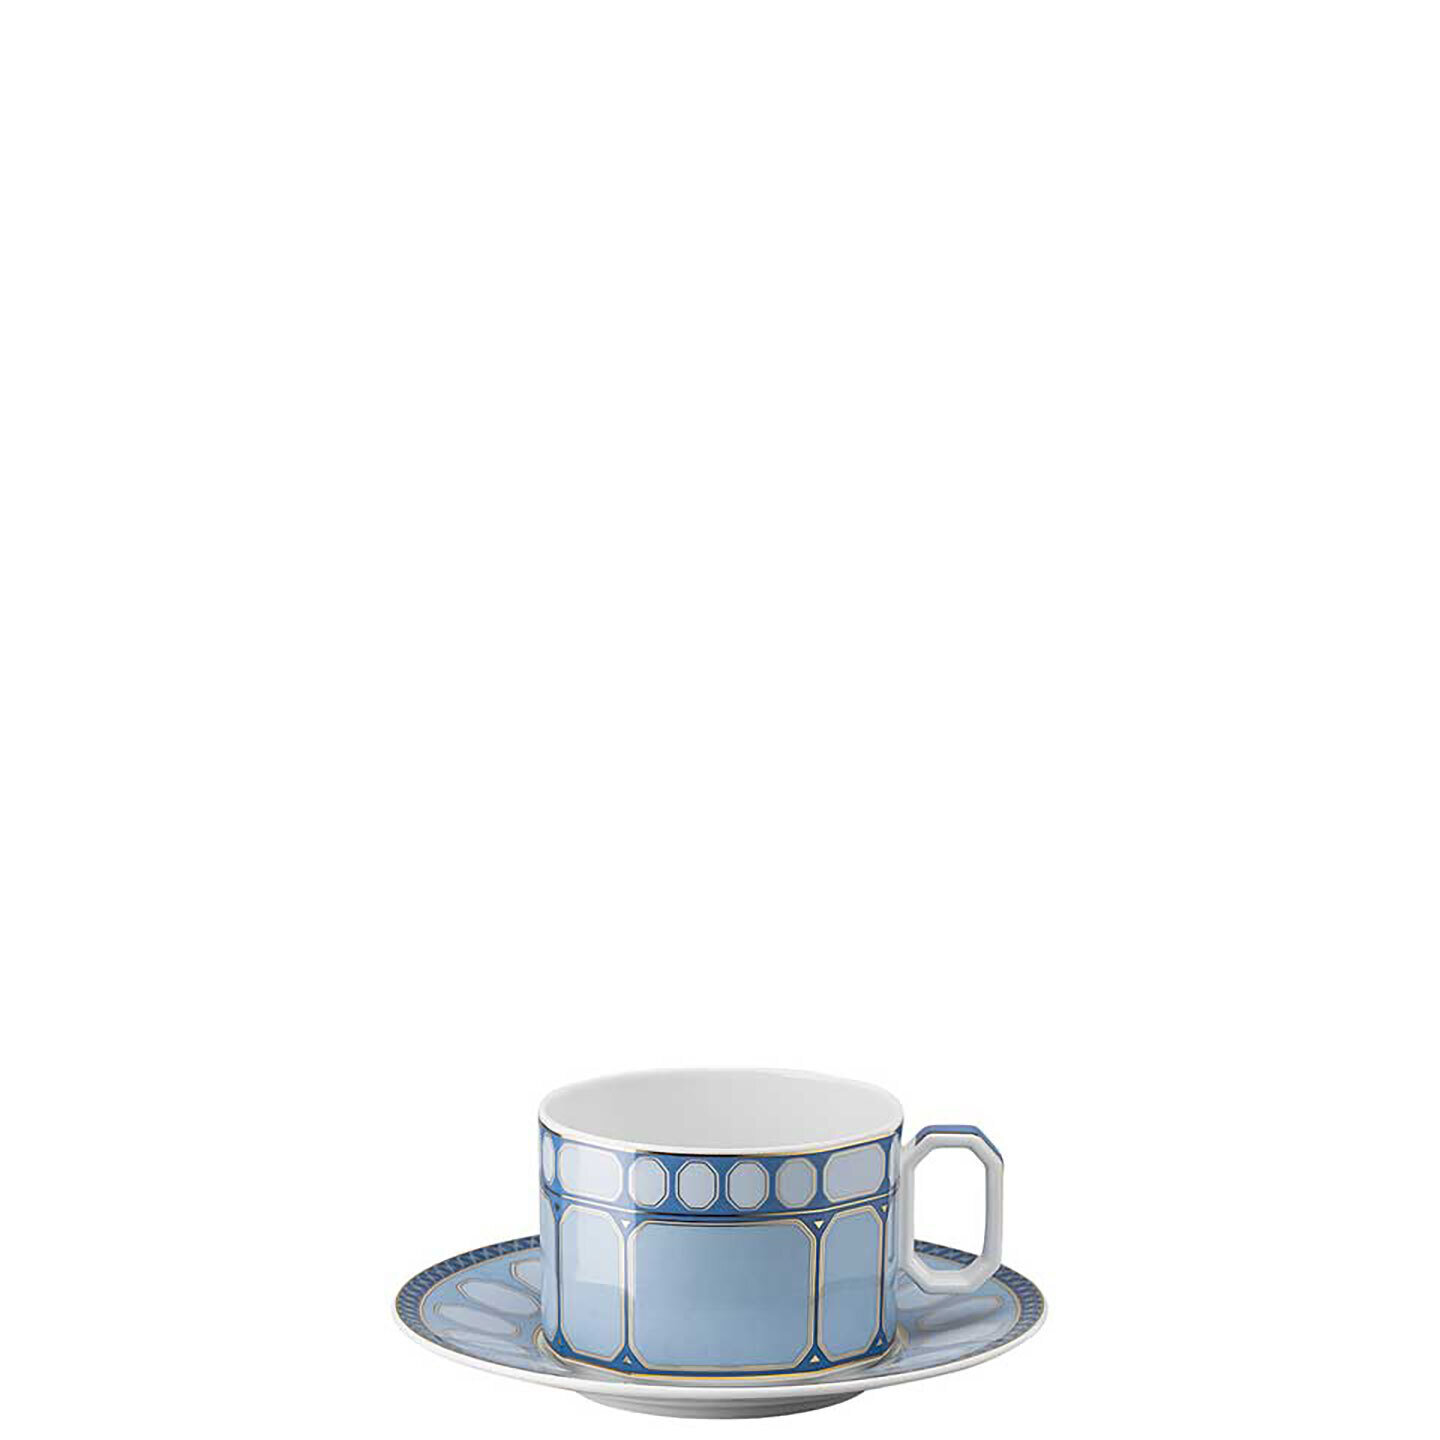 Rosenthal Swarovski Signum Tea Cup 8 oz & Saucer 6 Inch Azure Blue 10570-426351-14640